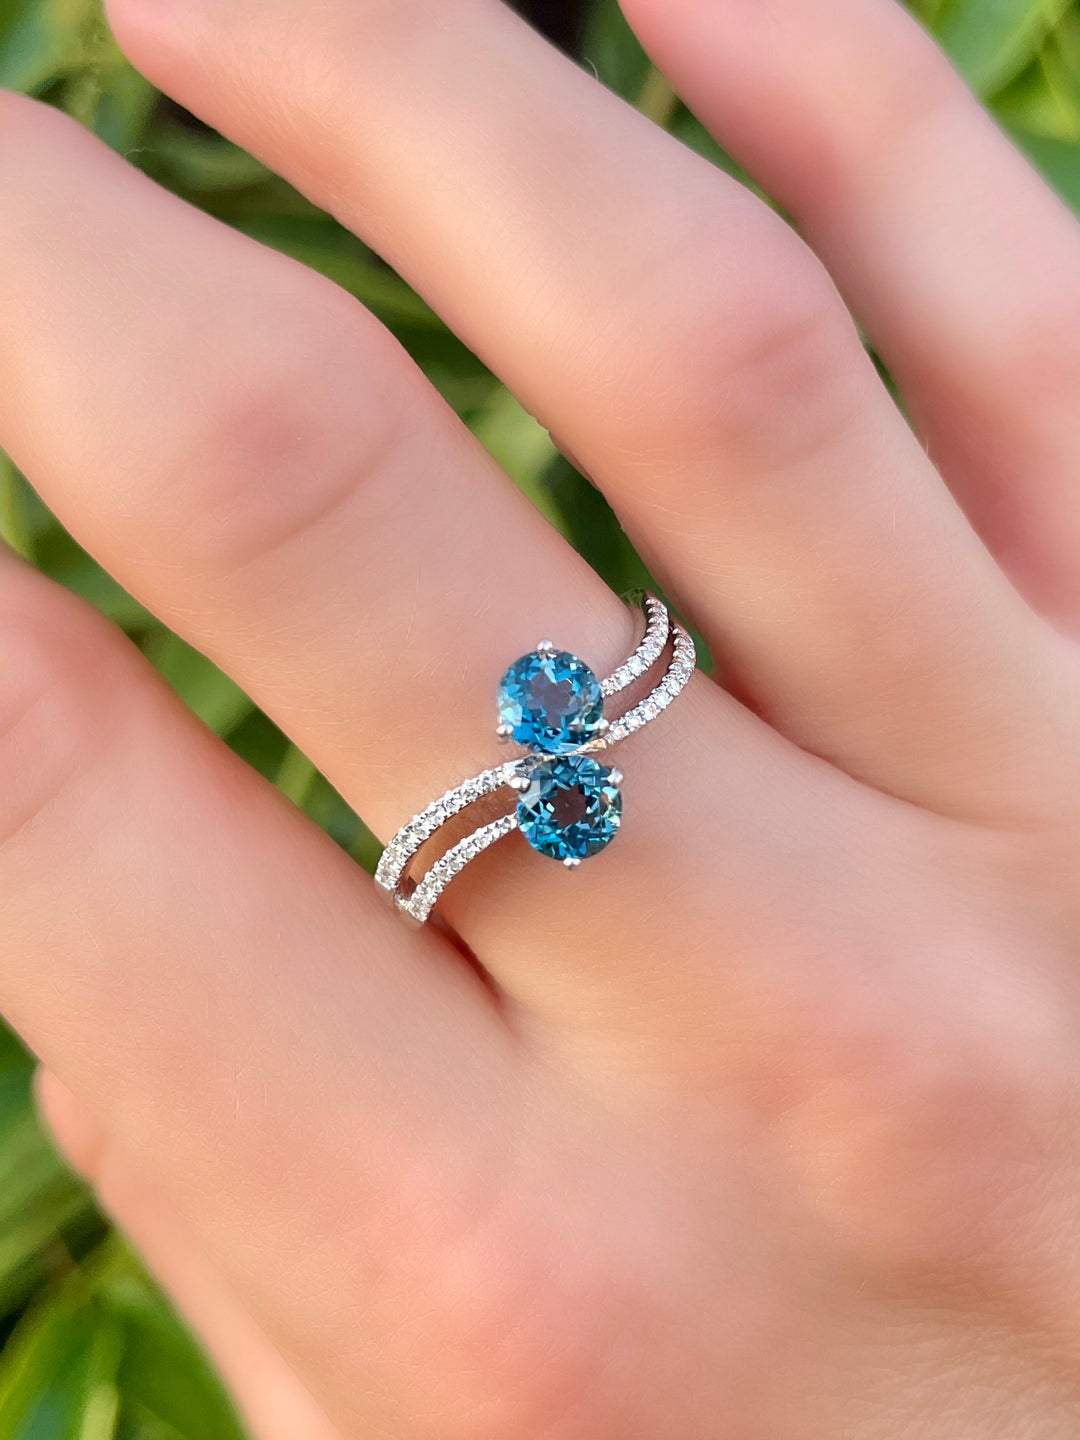 Beautiful Blue Topaz and Diamond Ring- on hand